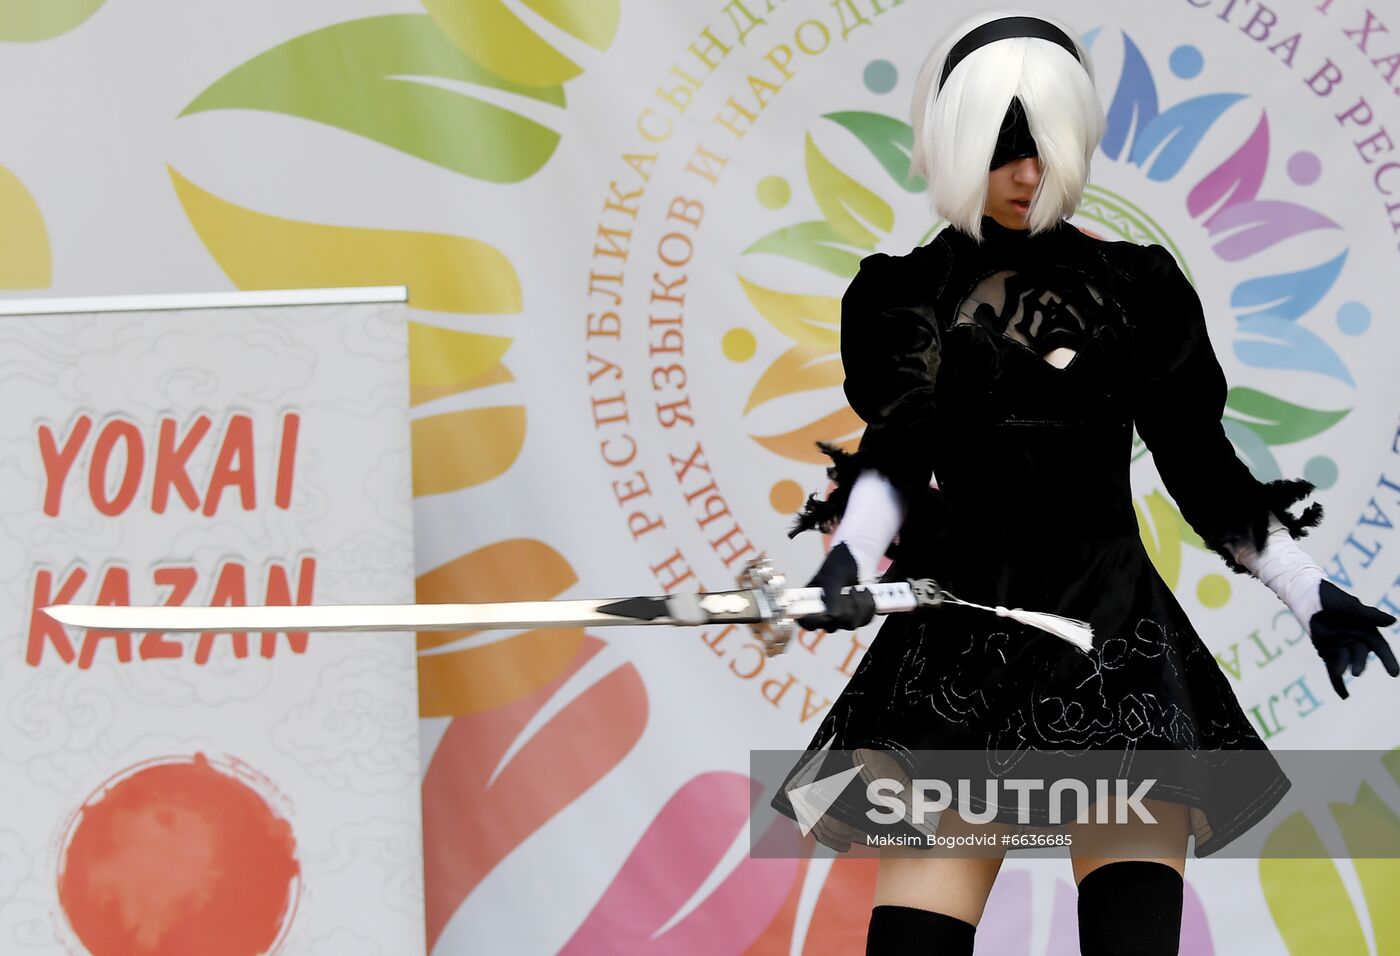 Russia Anime Festival